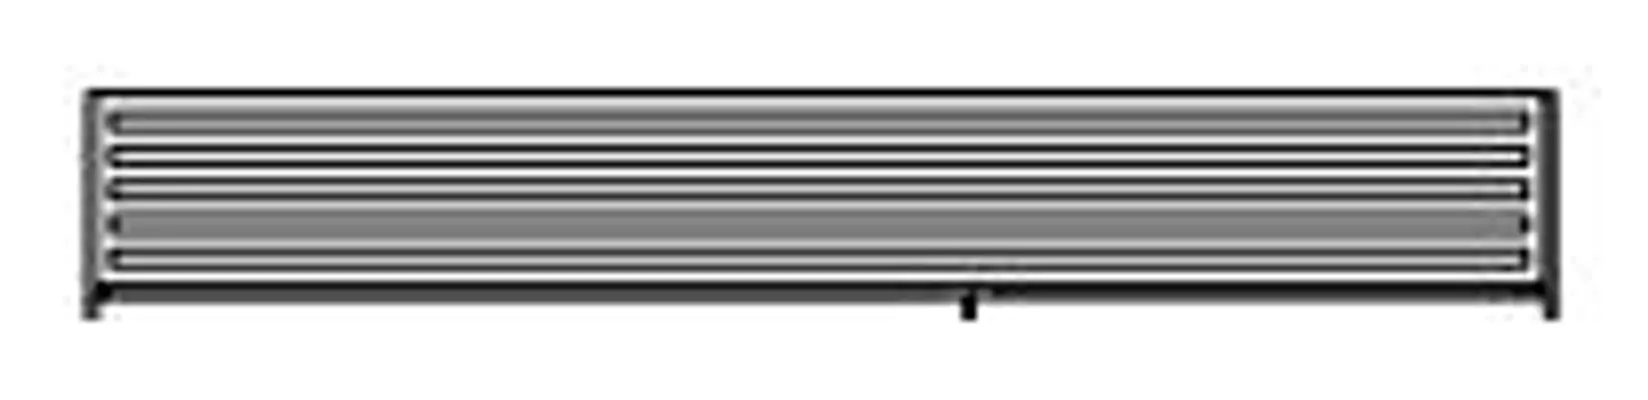 XPRO105TOP-Fhiaba-Koel-vries-accessoires